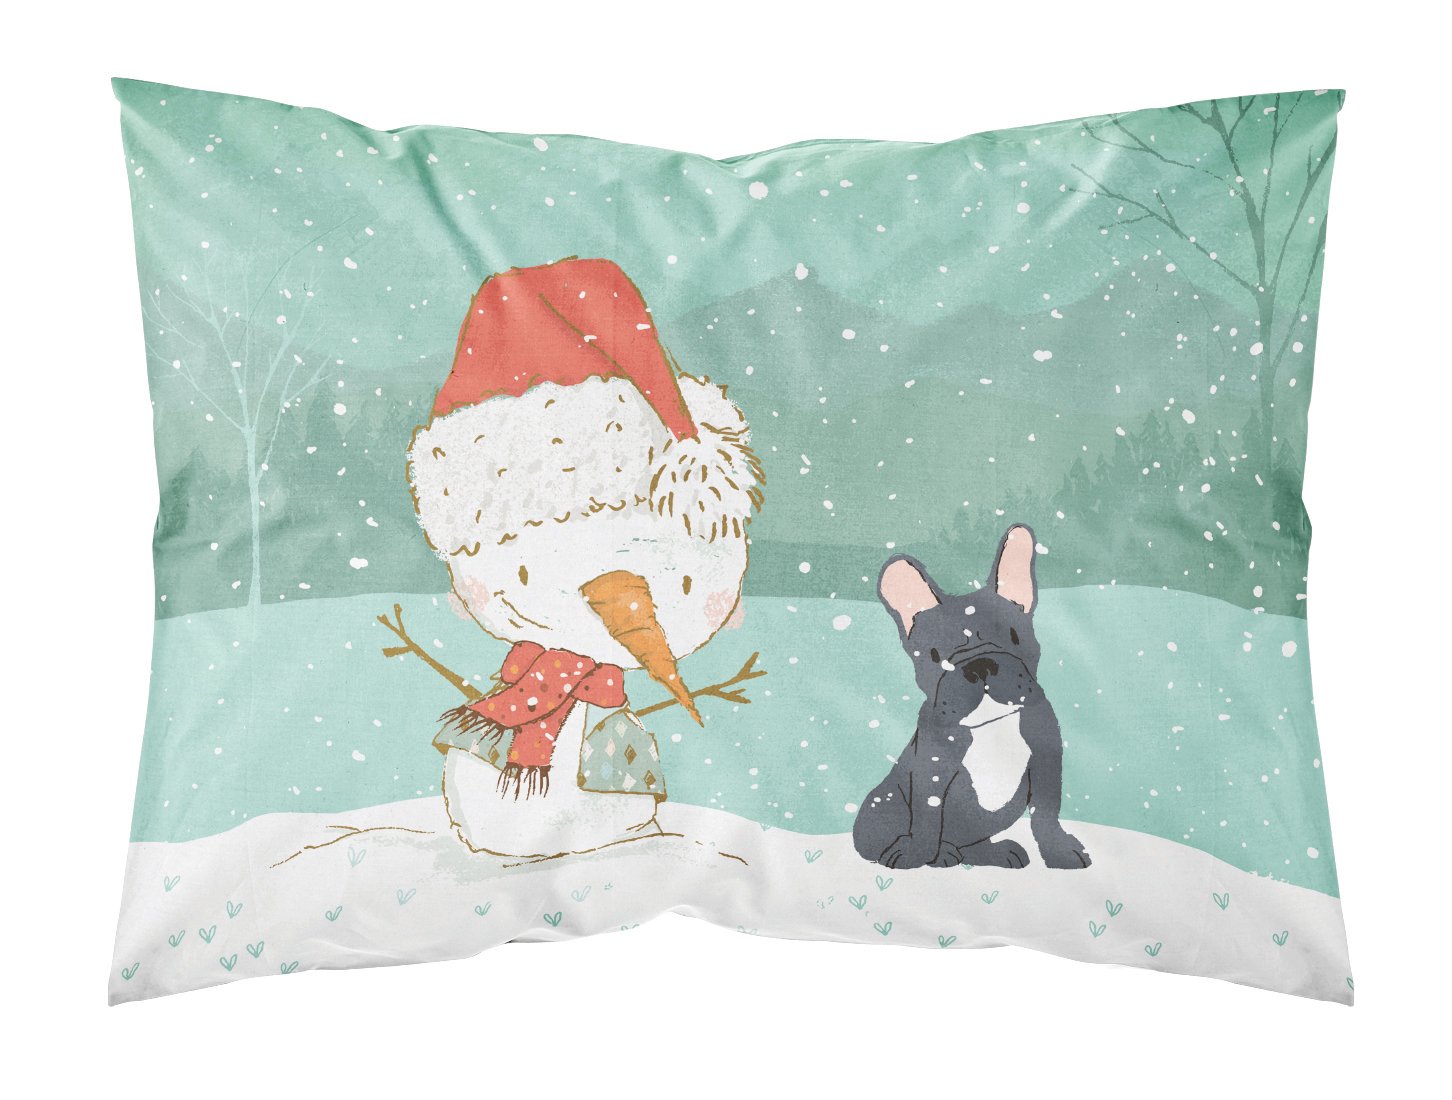 Black French Bulldog Snowman Christmas Fabric Standard Pillowcase CK2085PILLOWCASE by Caroline's Treasures